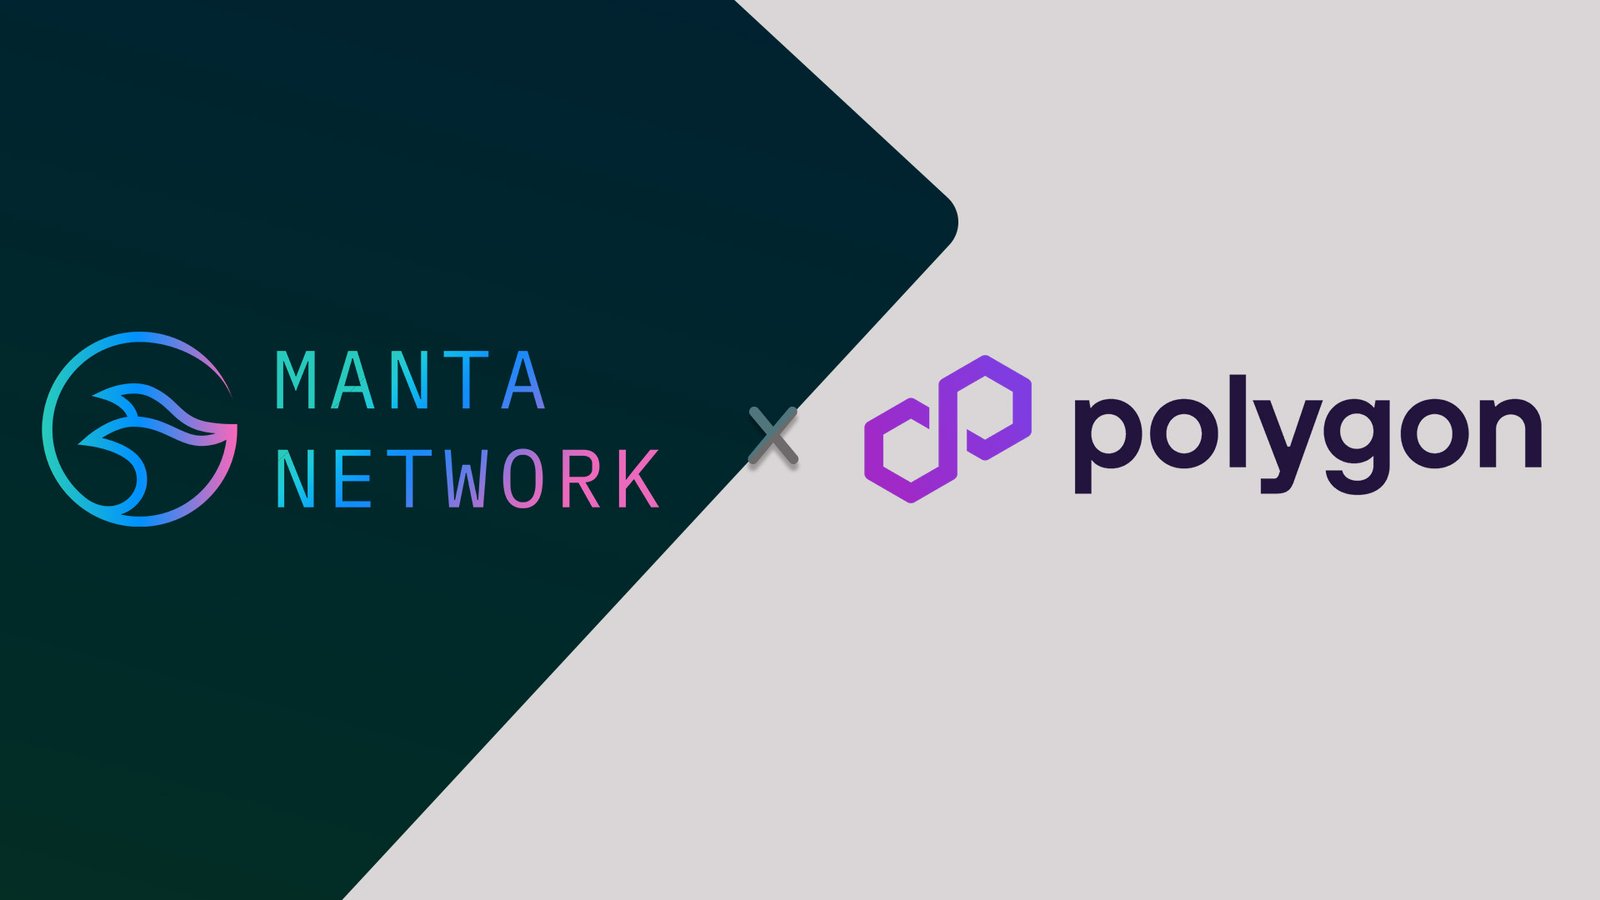 Manta Network and Polygon collaboration